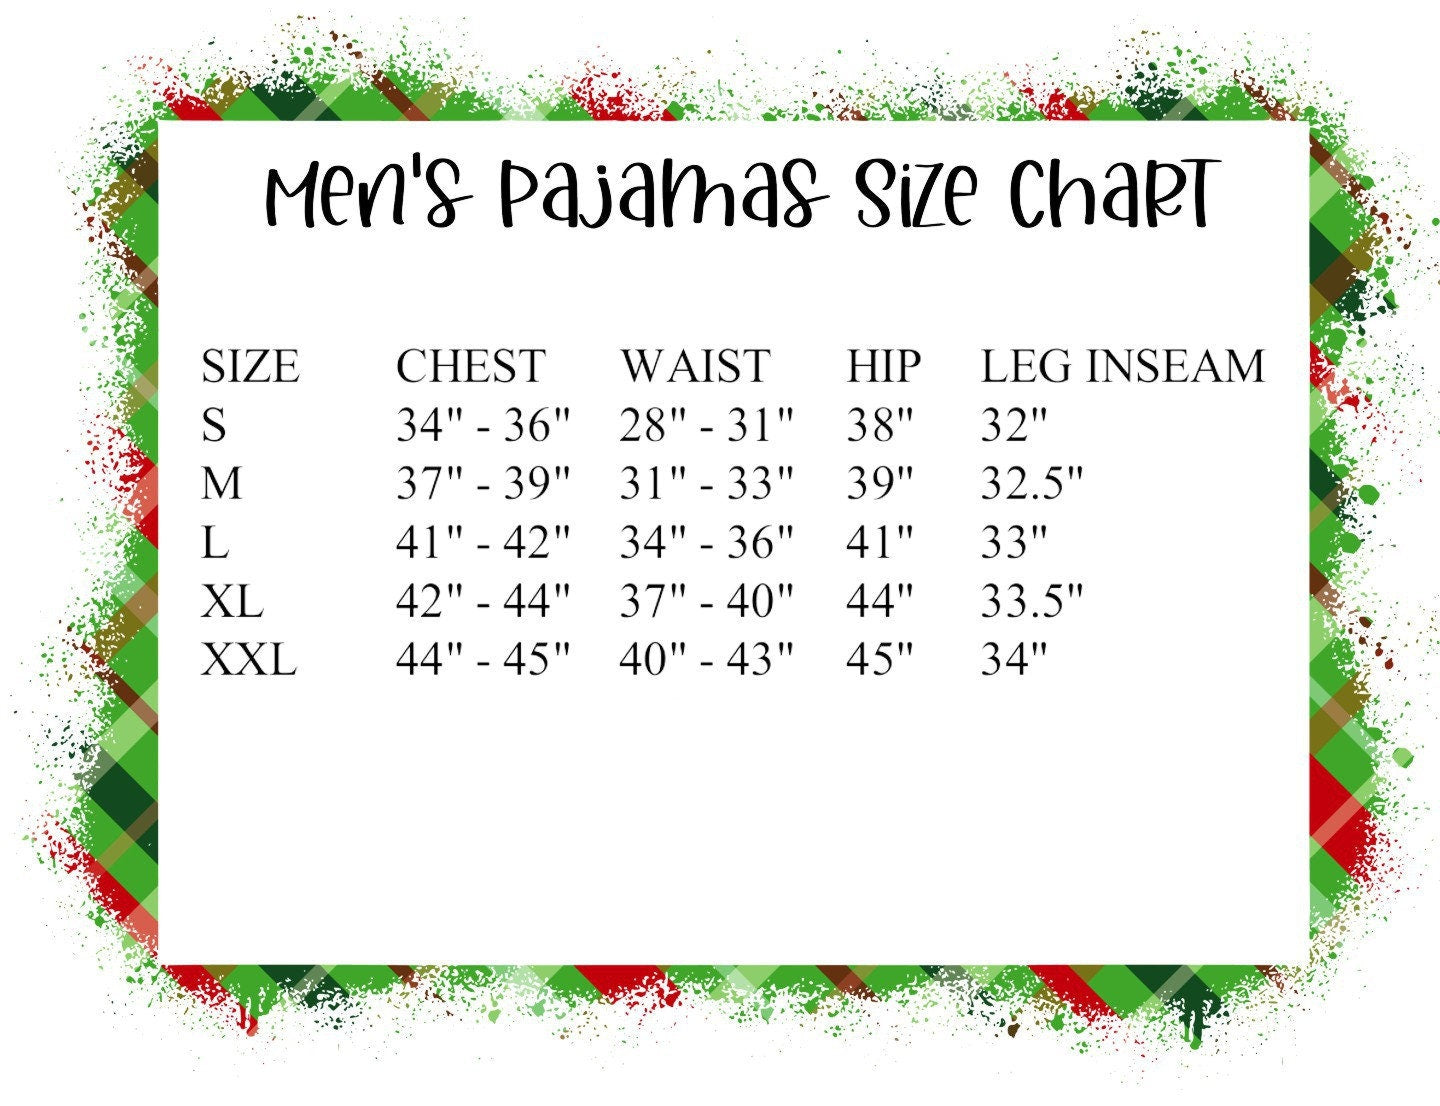 Christmas Pajamas Forest Green Mermaid Christmas Tree - adult and kids sizes - kids christmas pjs - christmas jammies - Family matching PJs